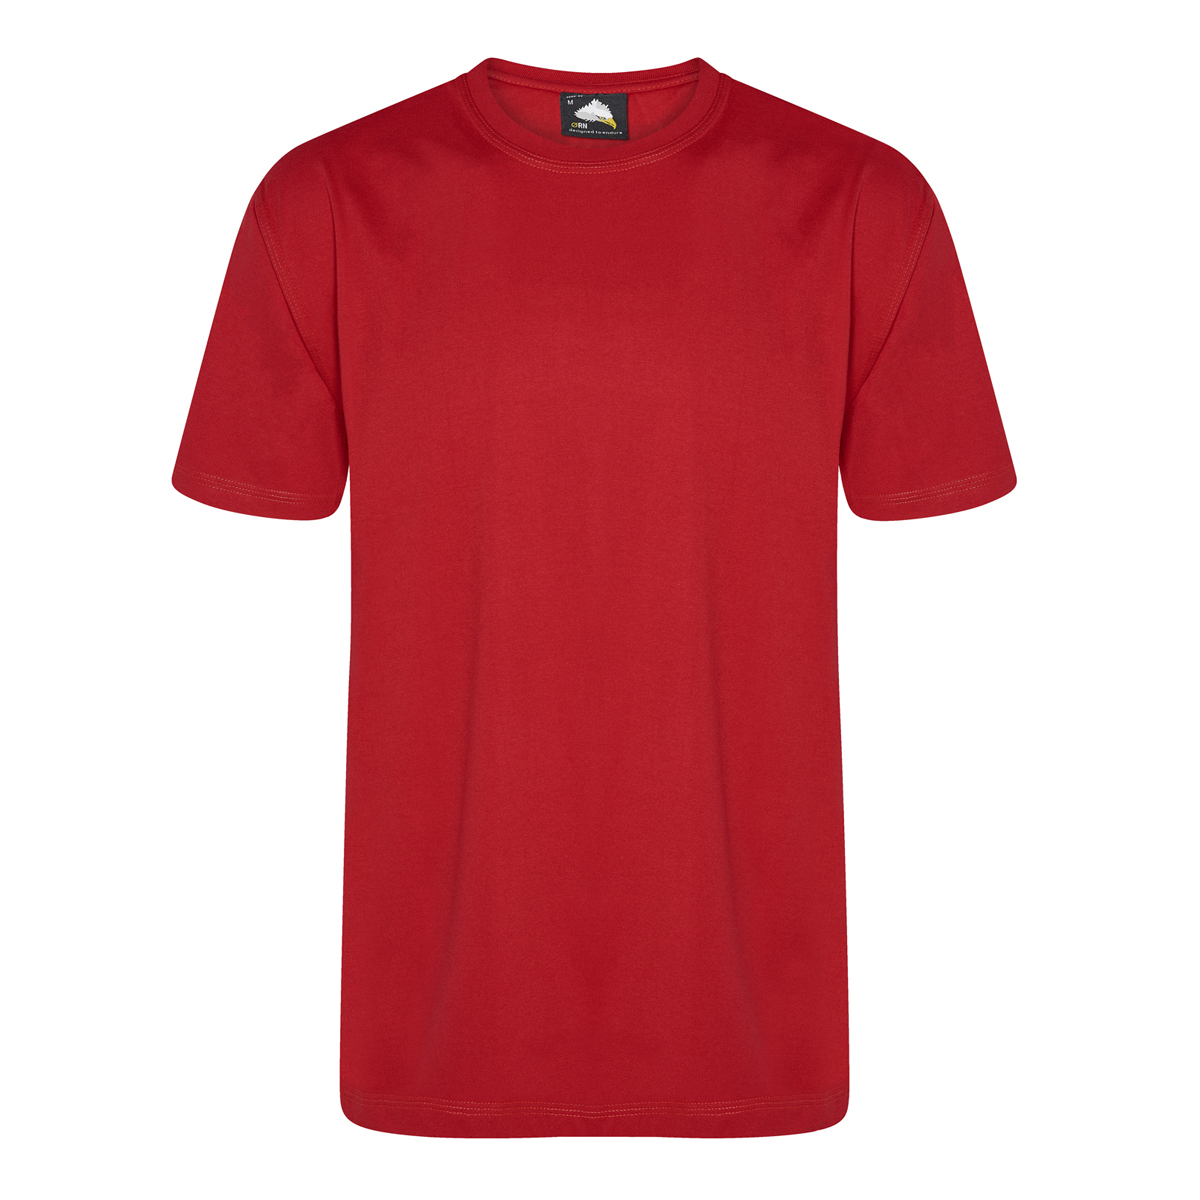 Goshawk deluxe t-shirt - m - red